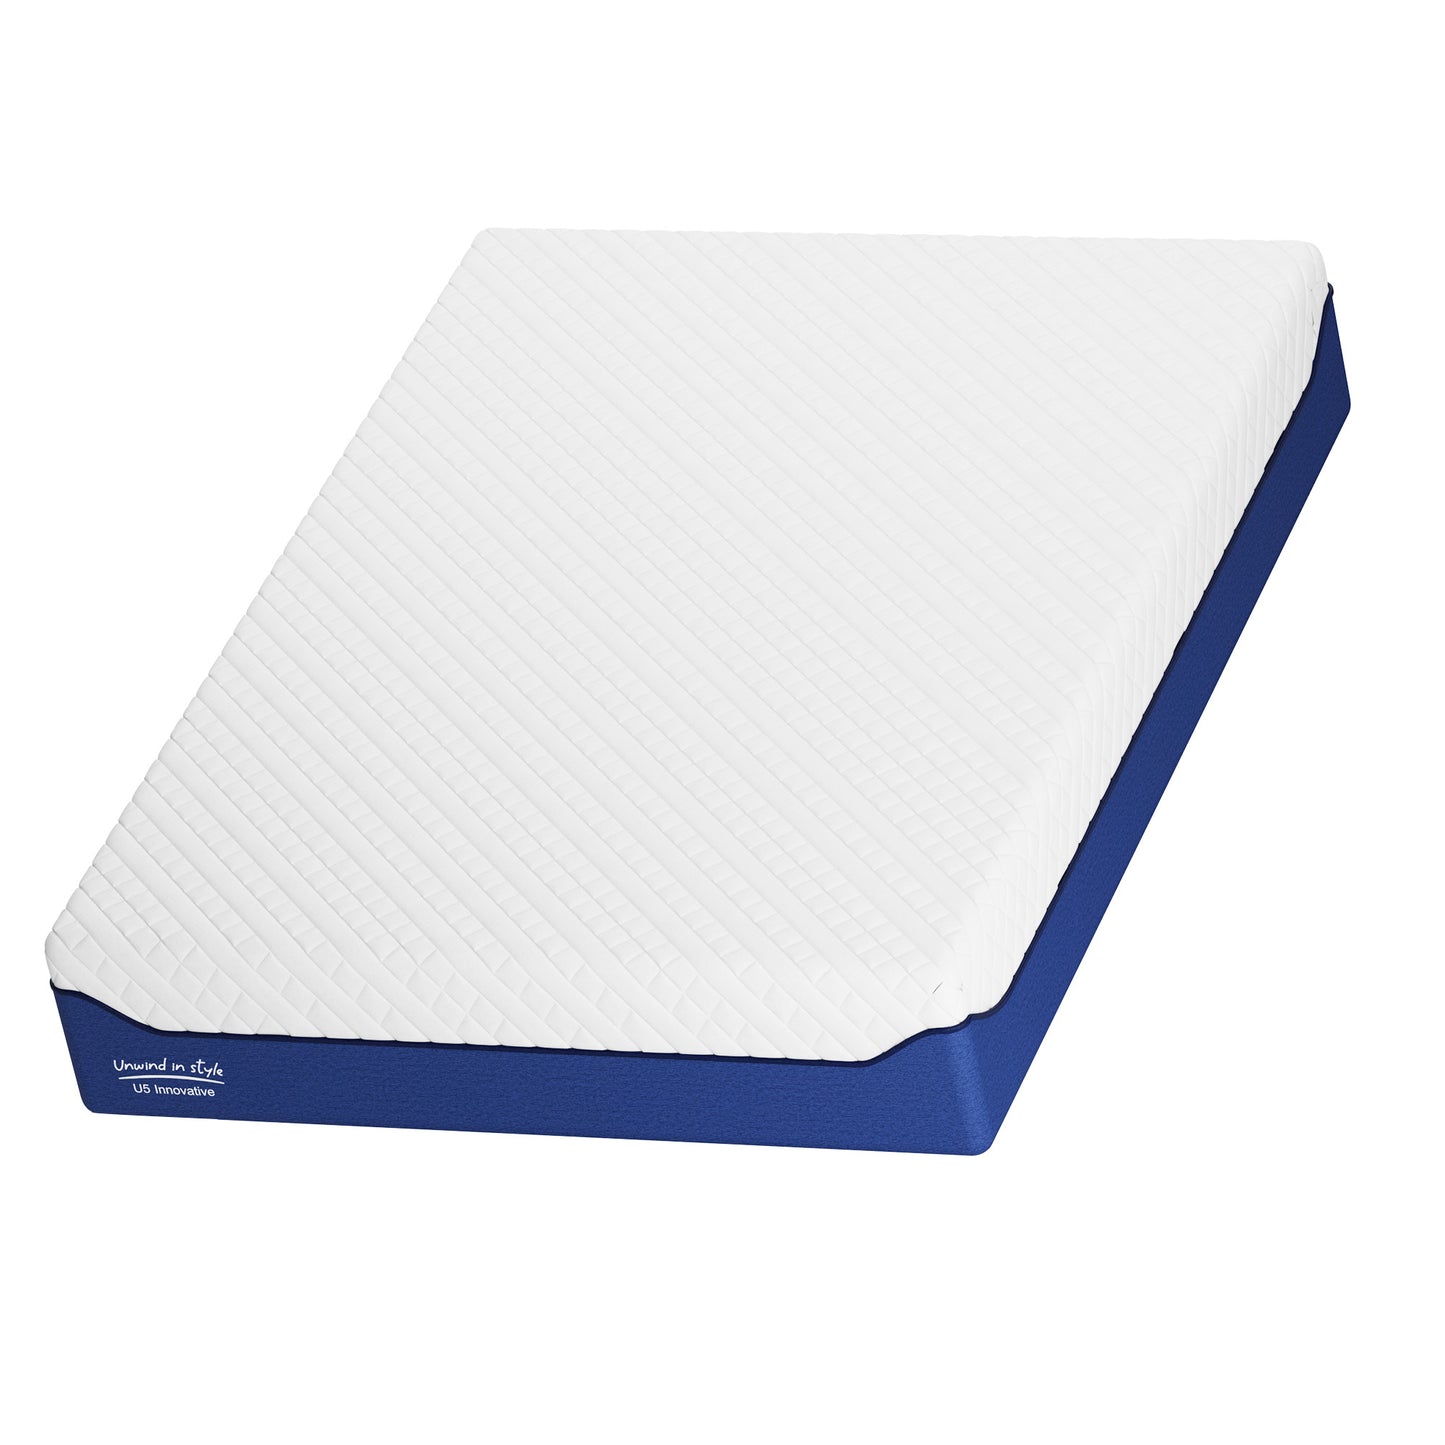 SogesPower 14inches Thickness Hybrid Mattress Gel Memory Foam- Queen， White+Blue